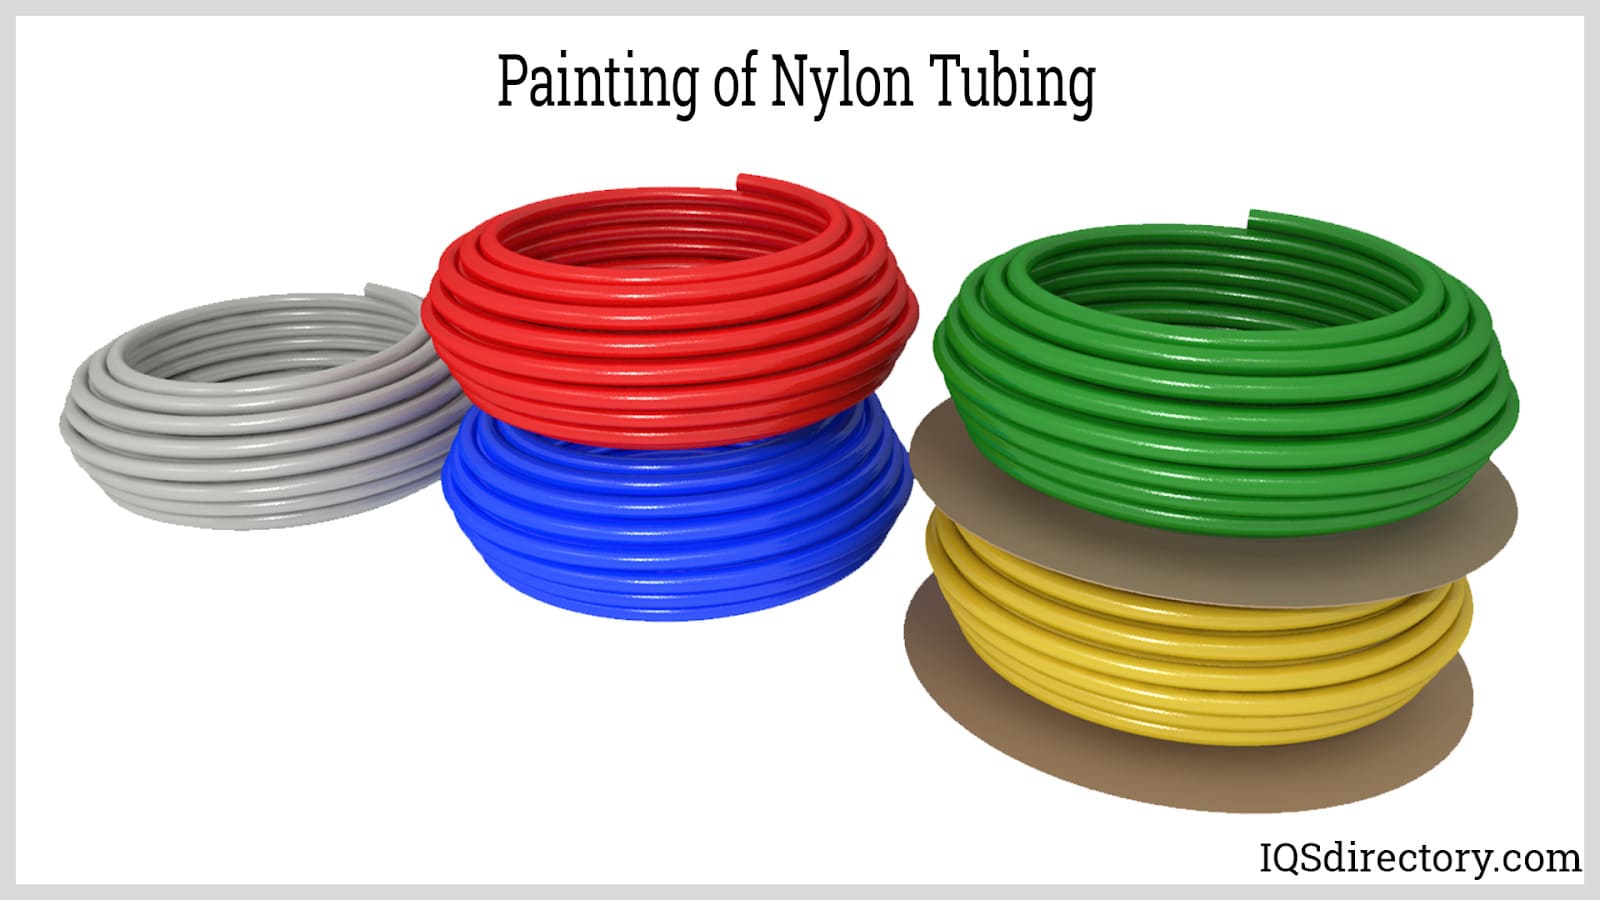 Painting of Nylon Tubing